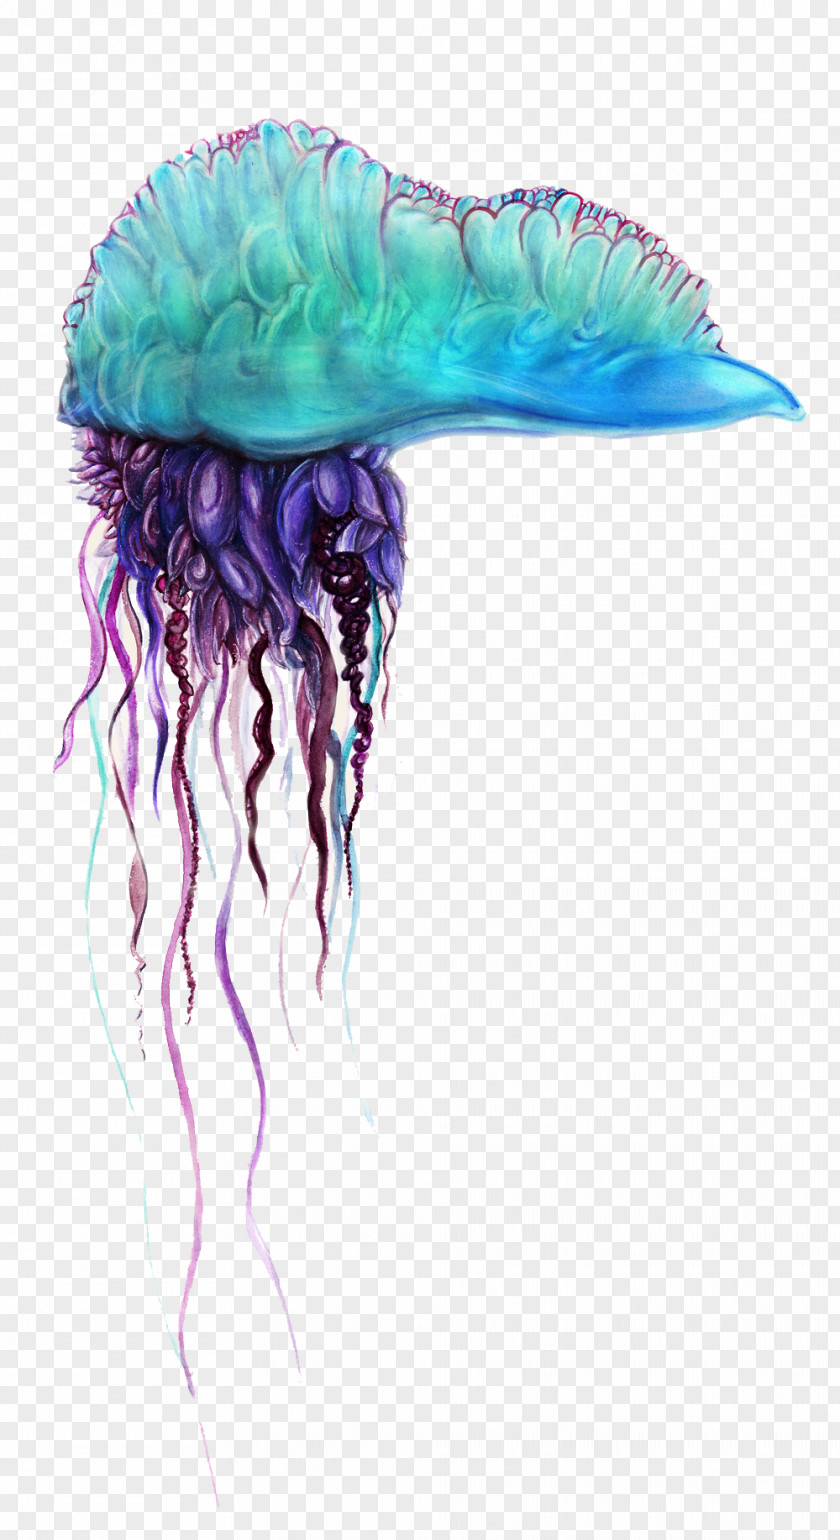 Water Png Transparent Background Portuguese Man O' War Portable Network Graphics Jellyfish Image Desktop Wallpaper PNG